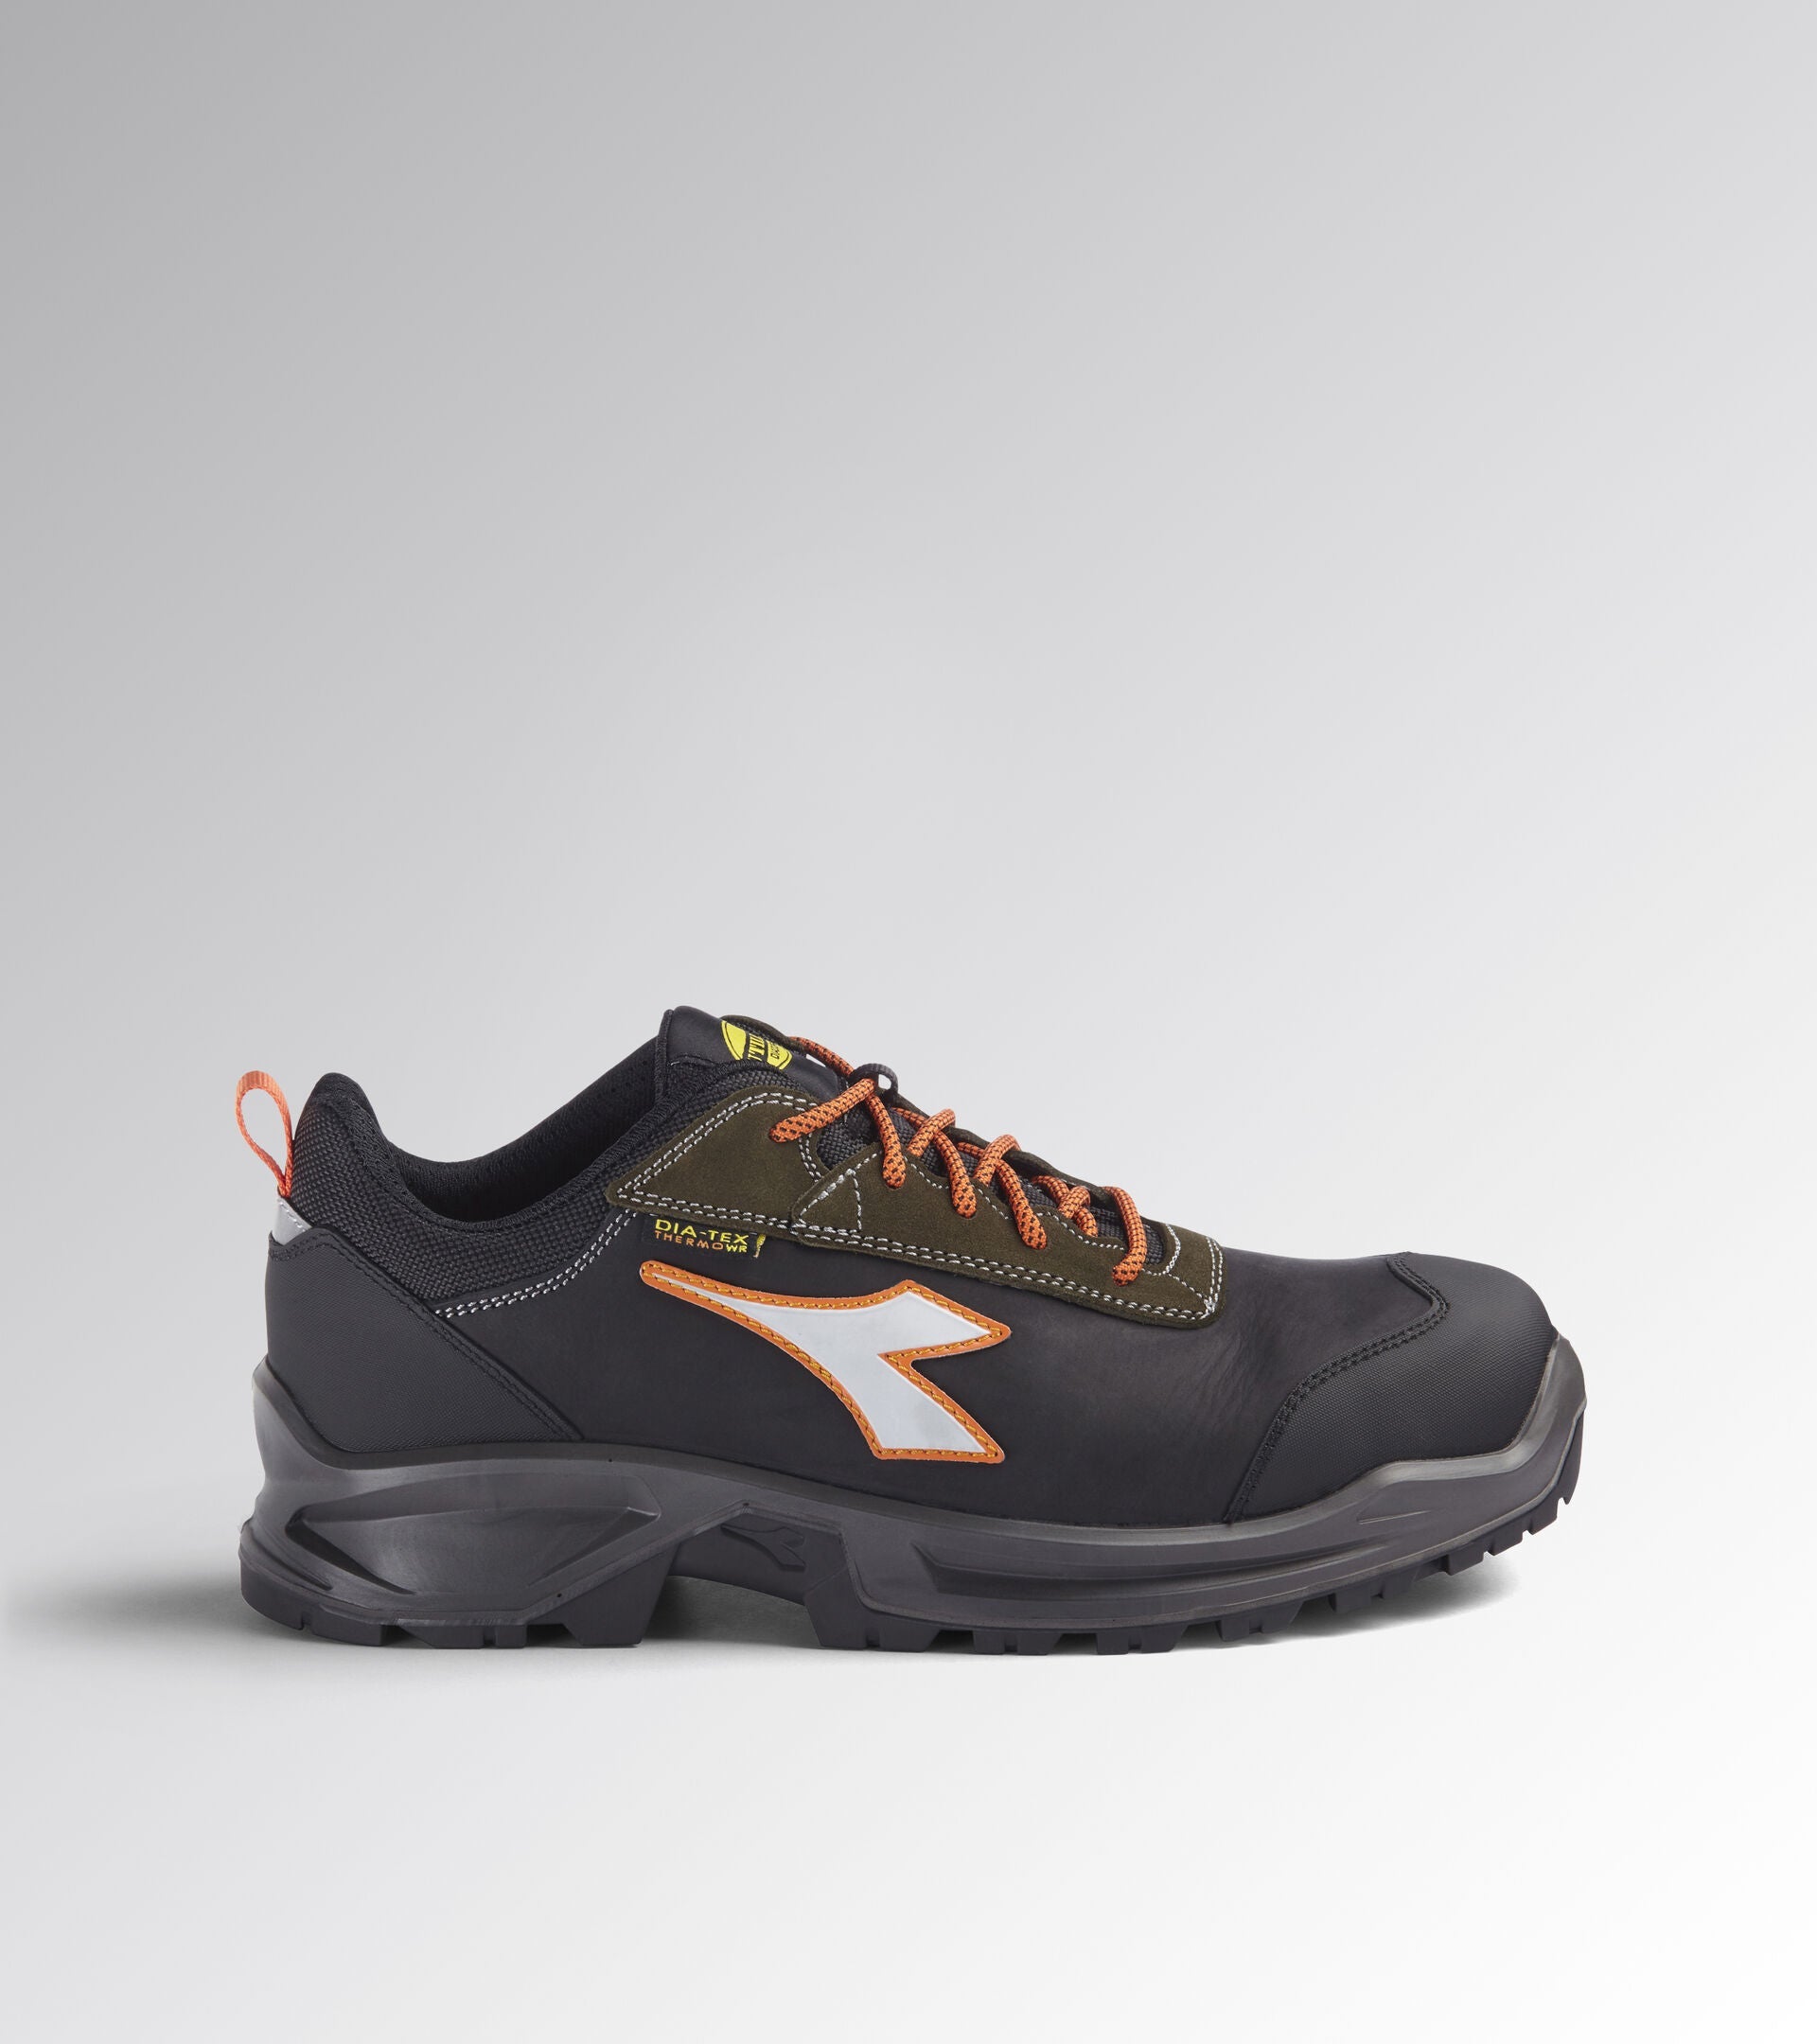 Chaussures imperméables thermo-isolantes SPORT DIATEX S3 Noir / Orange 45 5